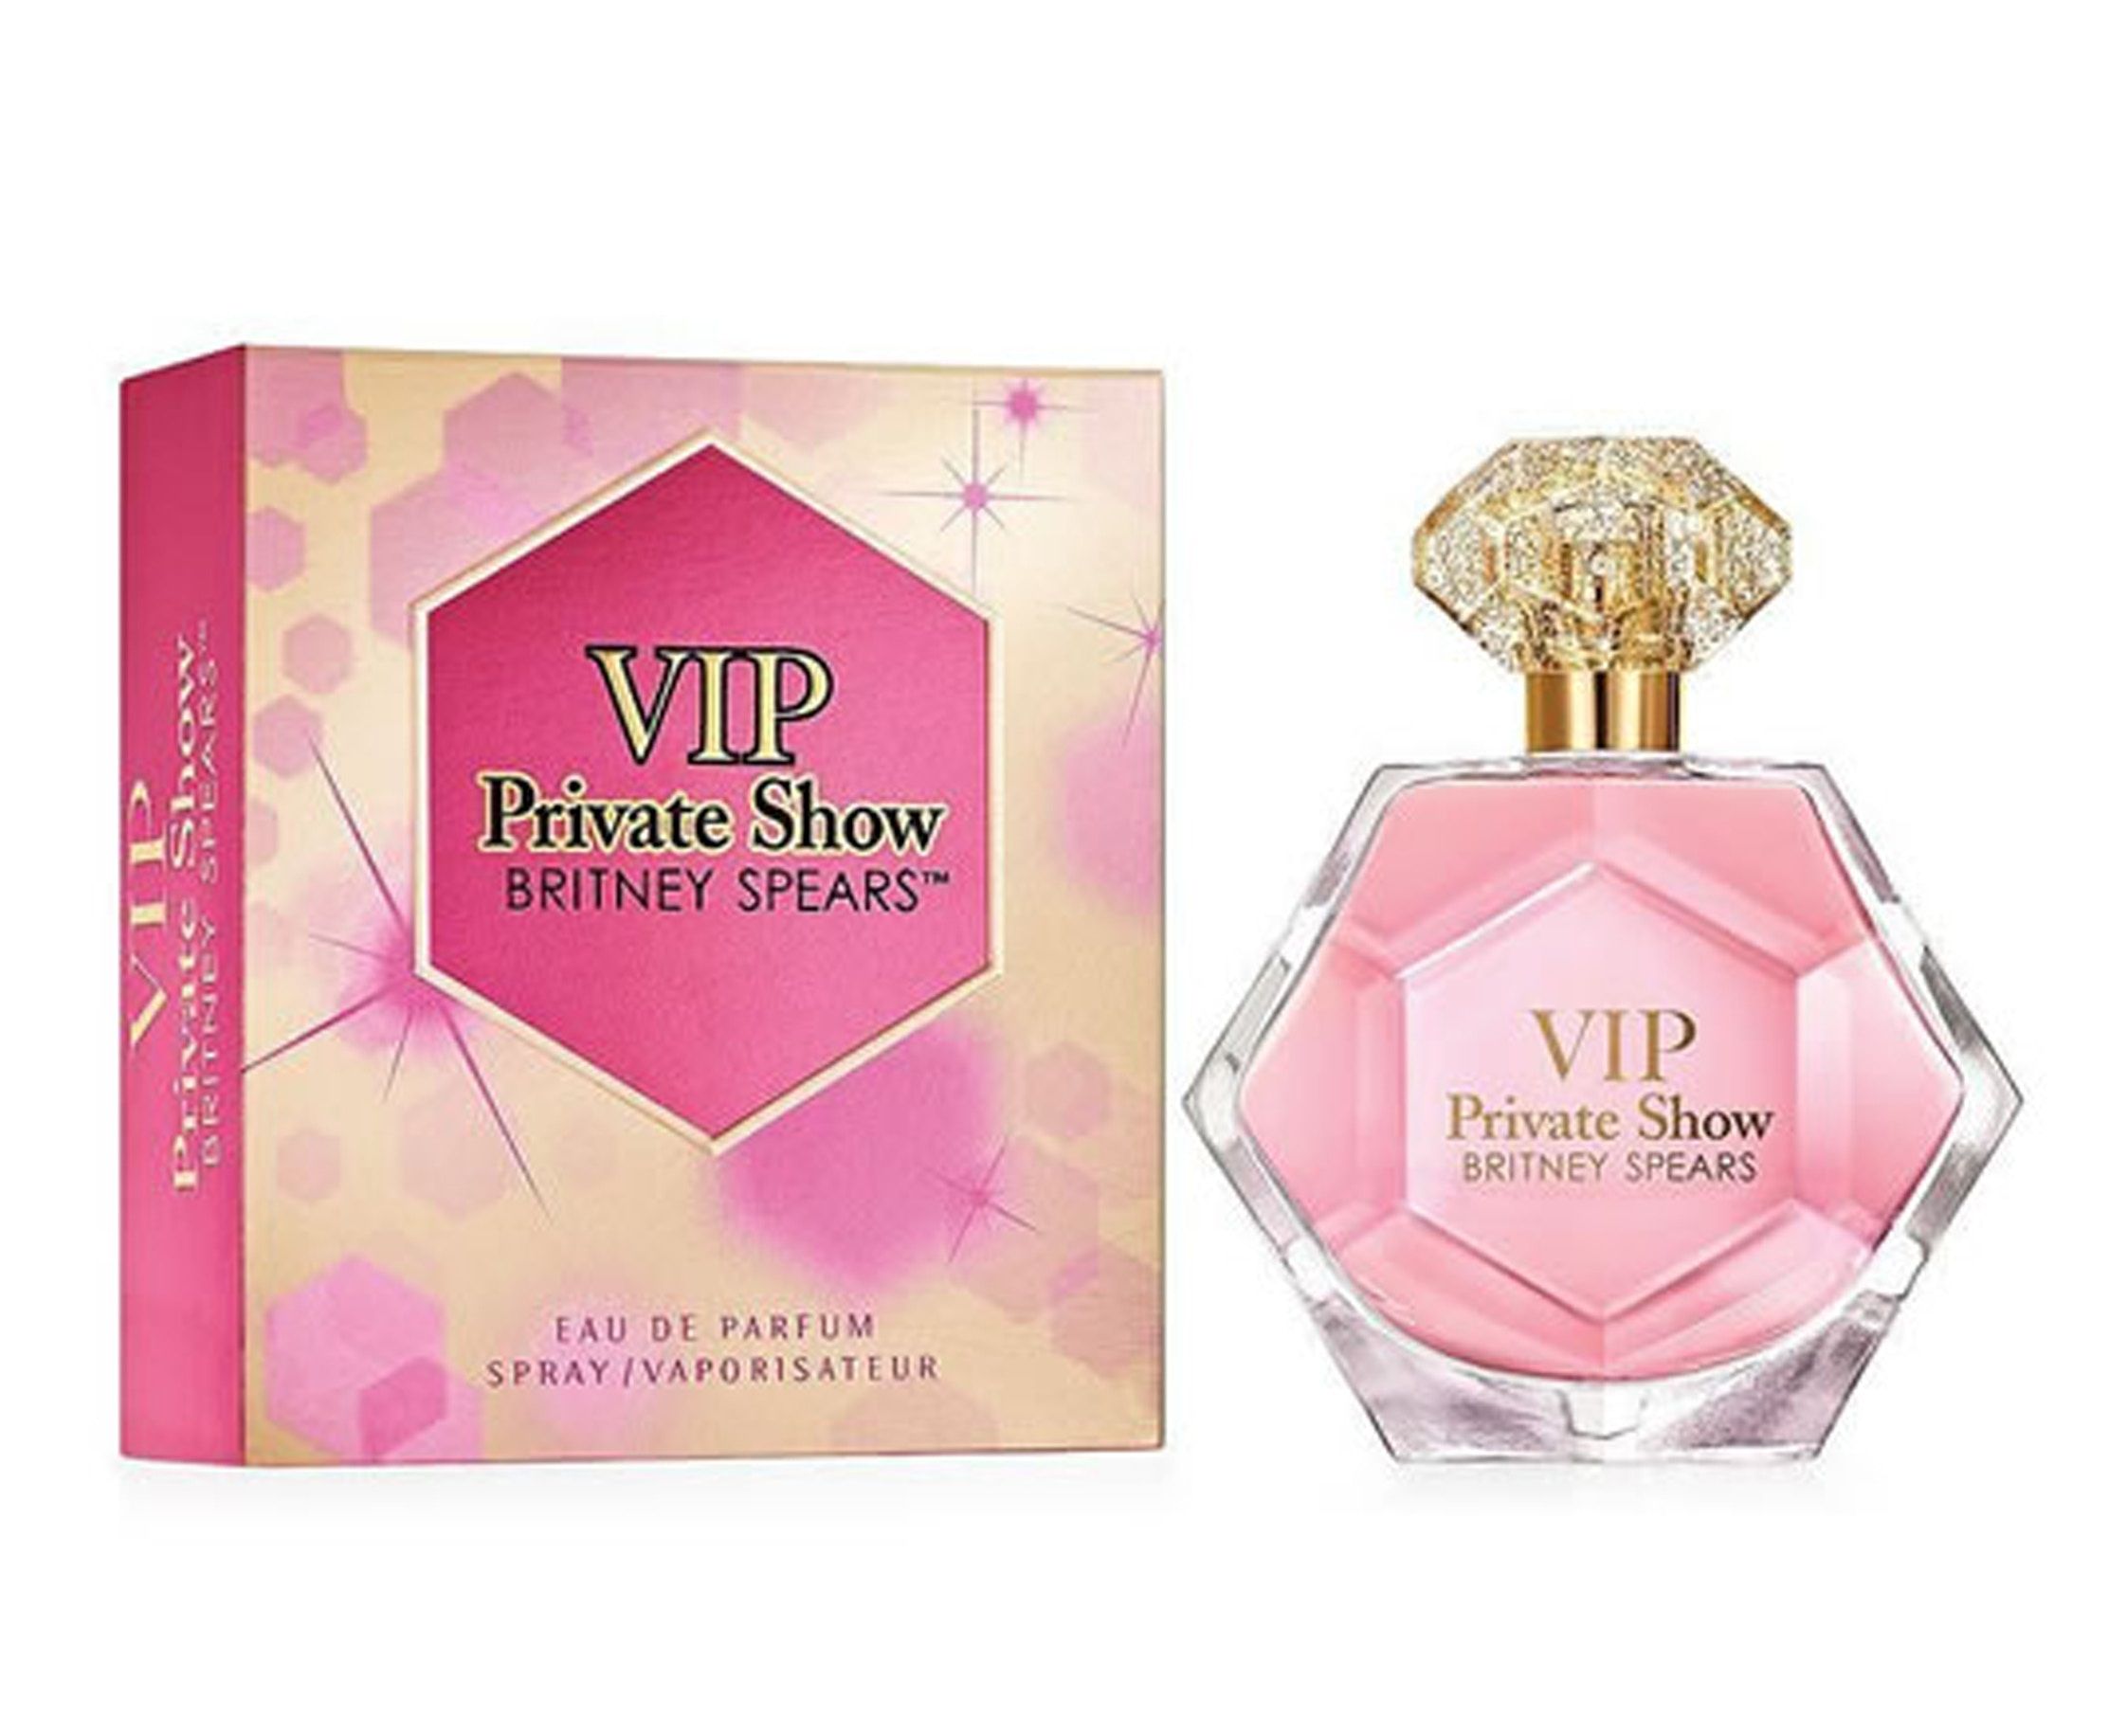 Britney Spears Vip Private Show Eau De Parfum Spray 50ml